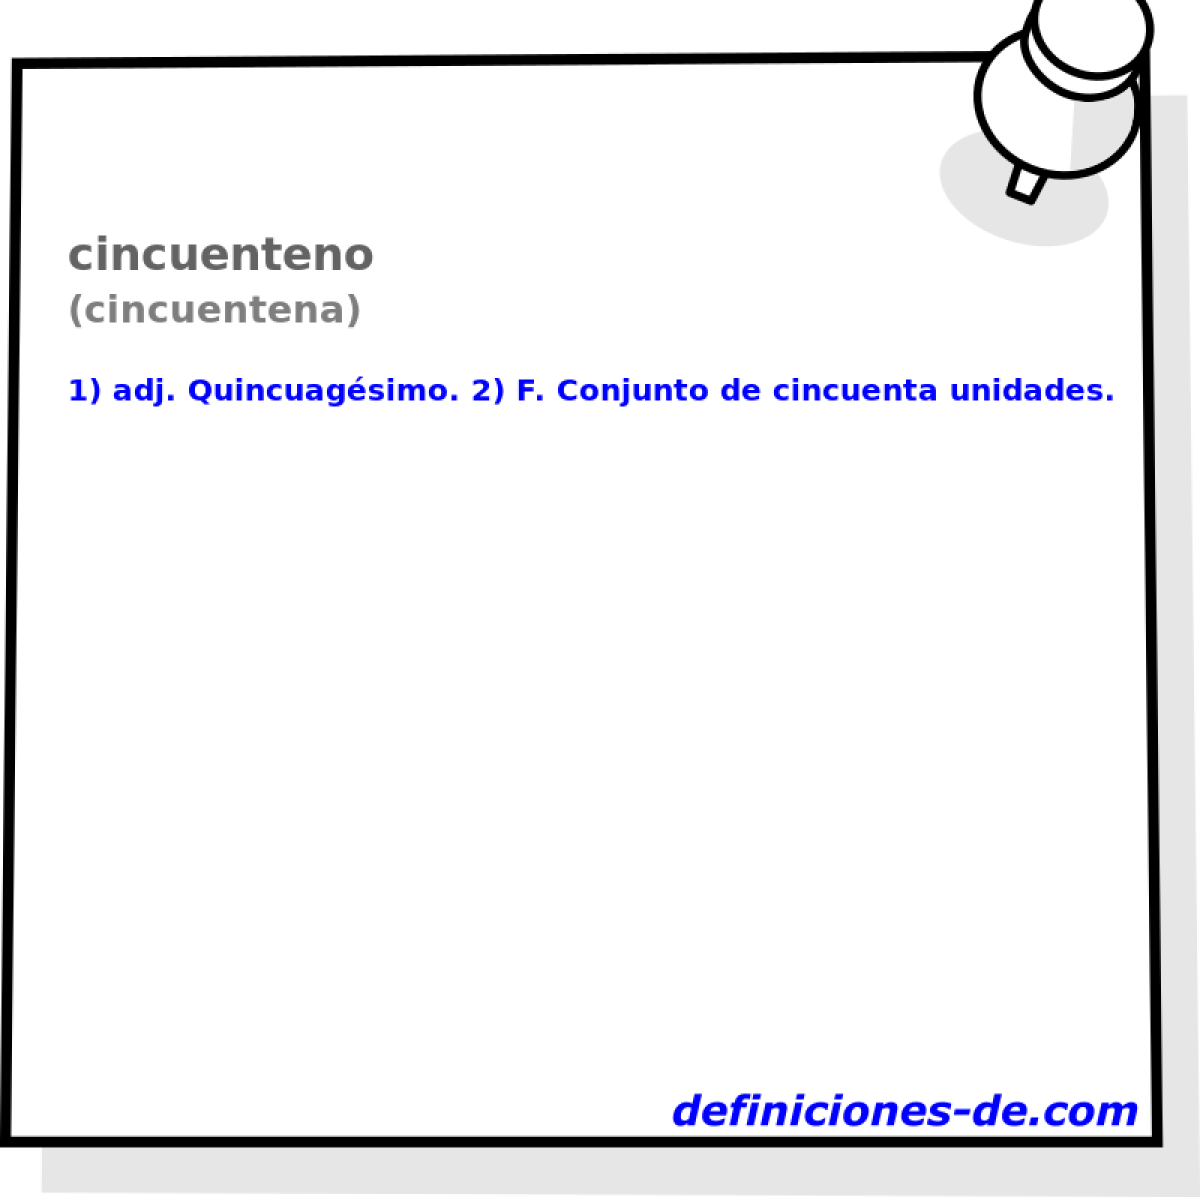 cincuenteno (cincuentena)